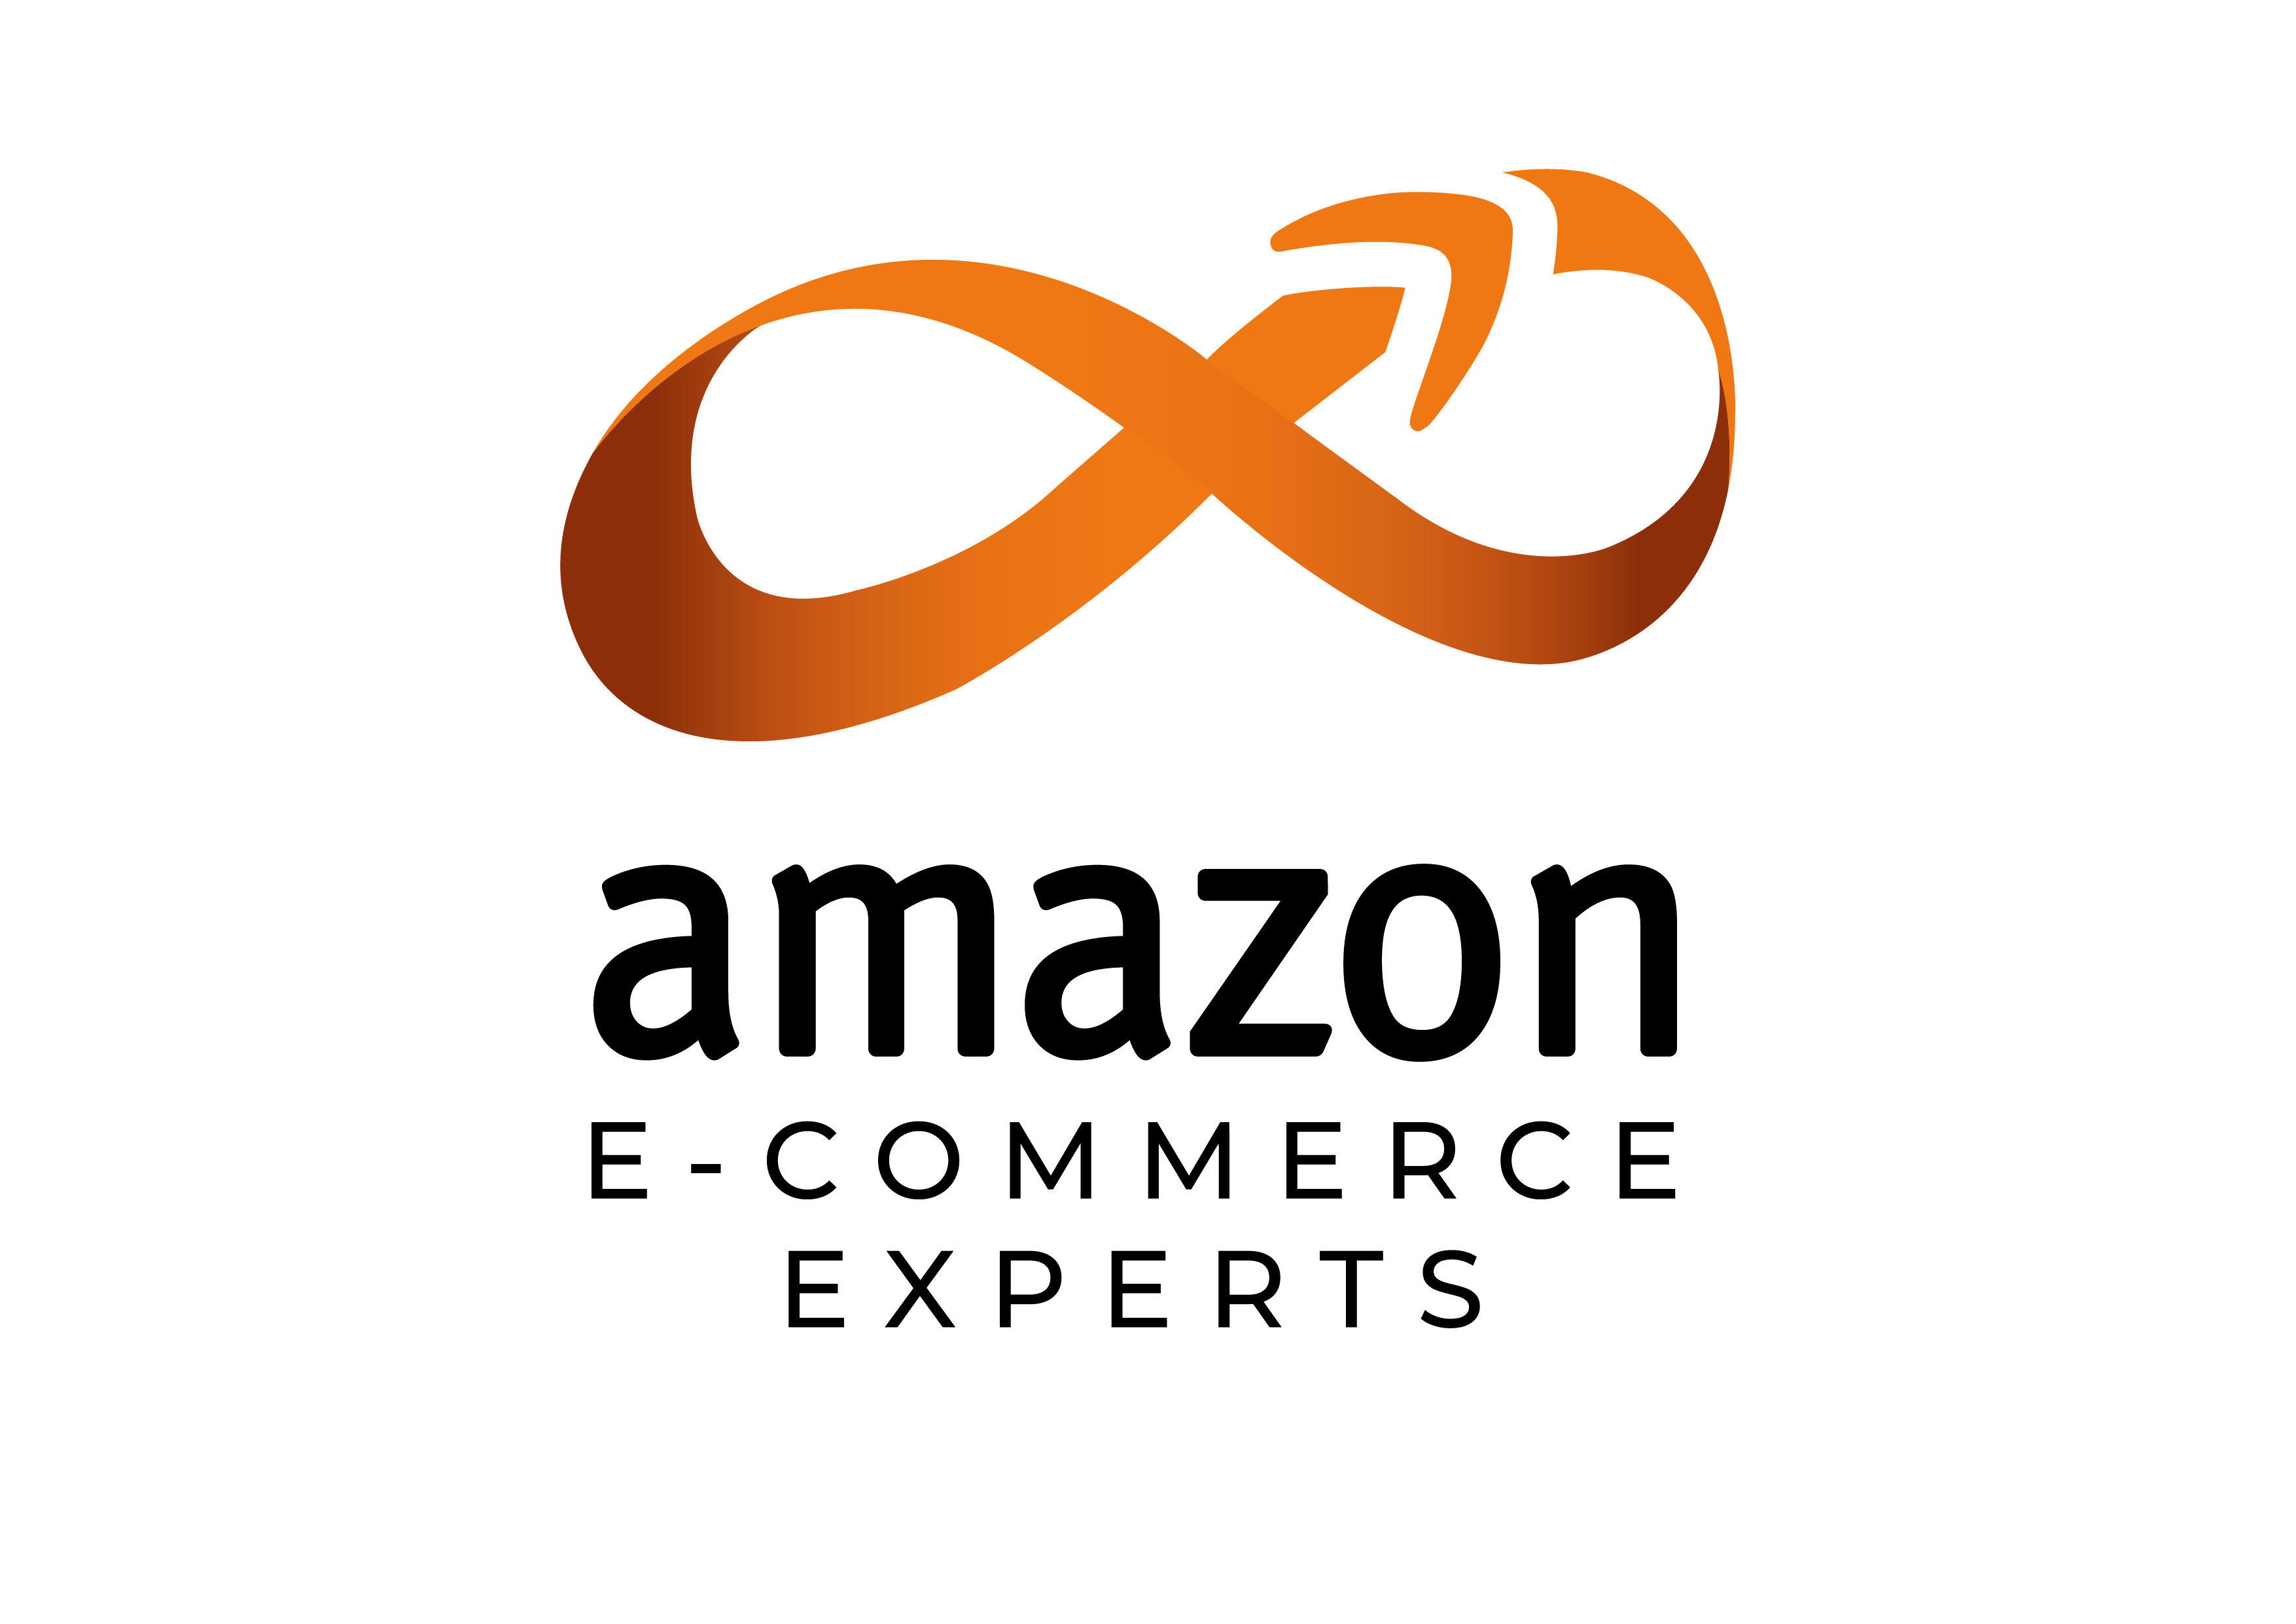 Amazon E-Commerce Experts